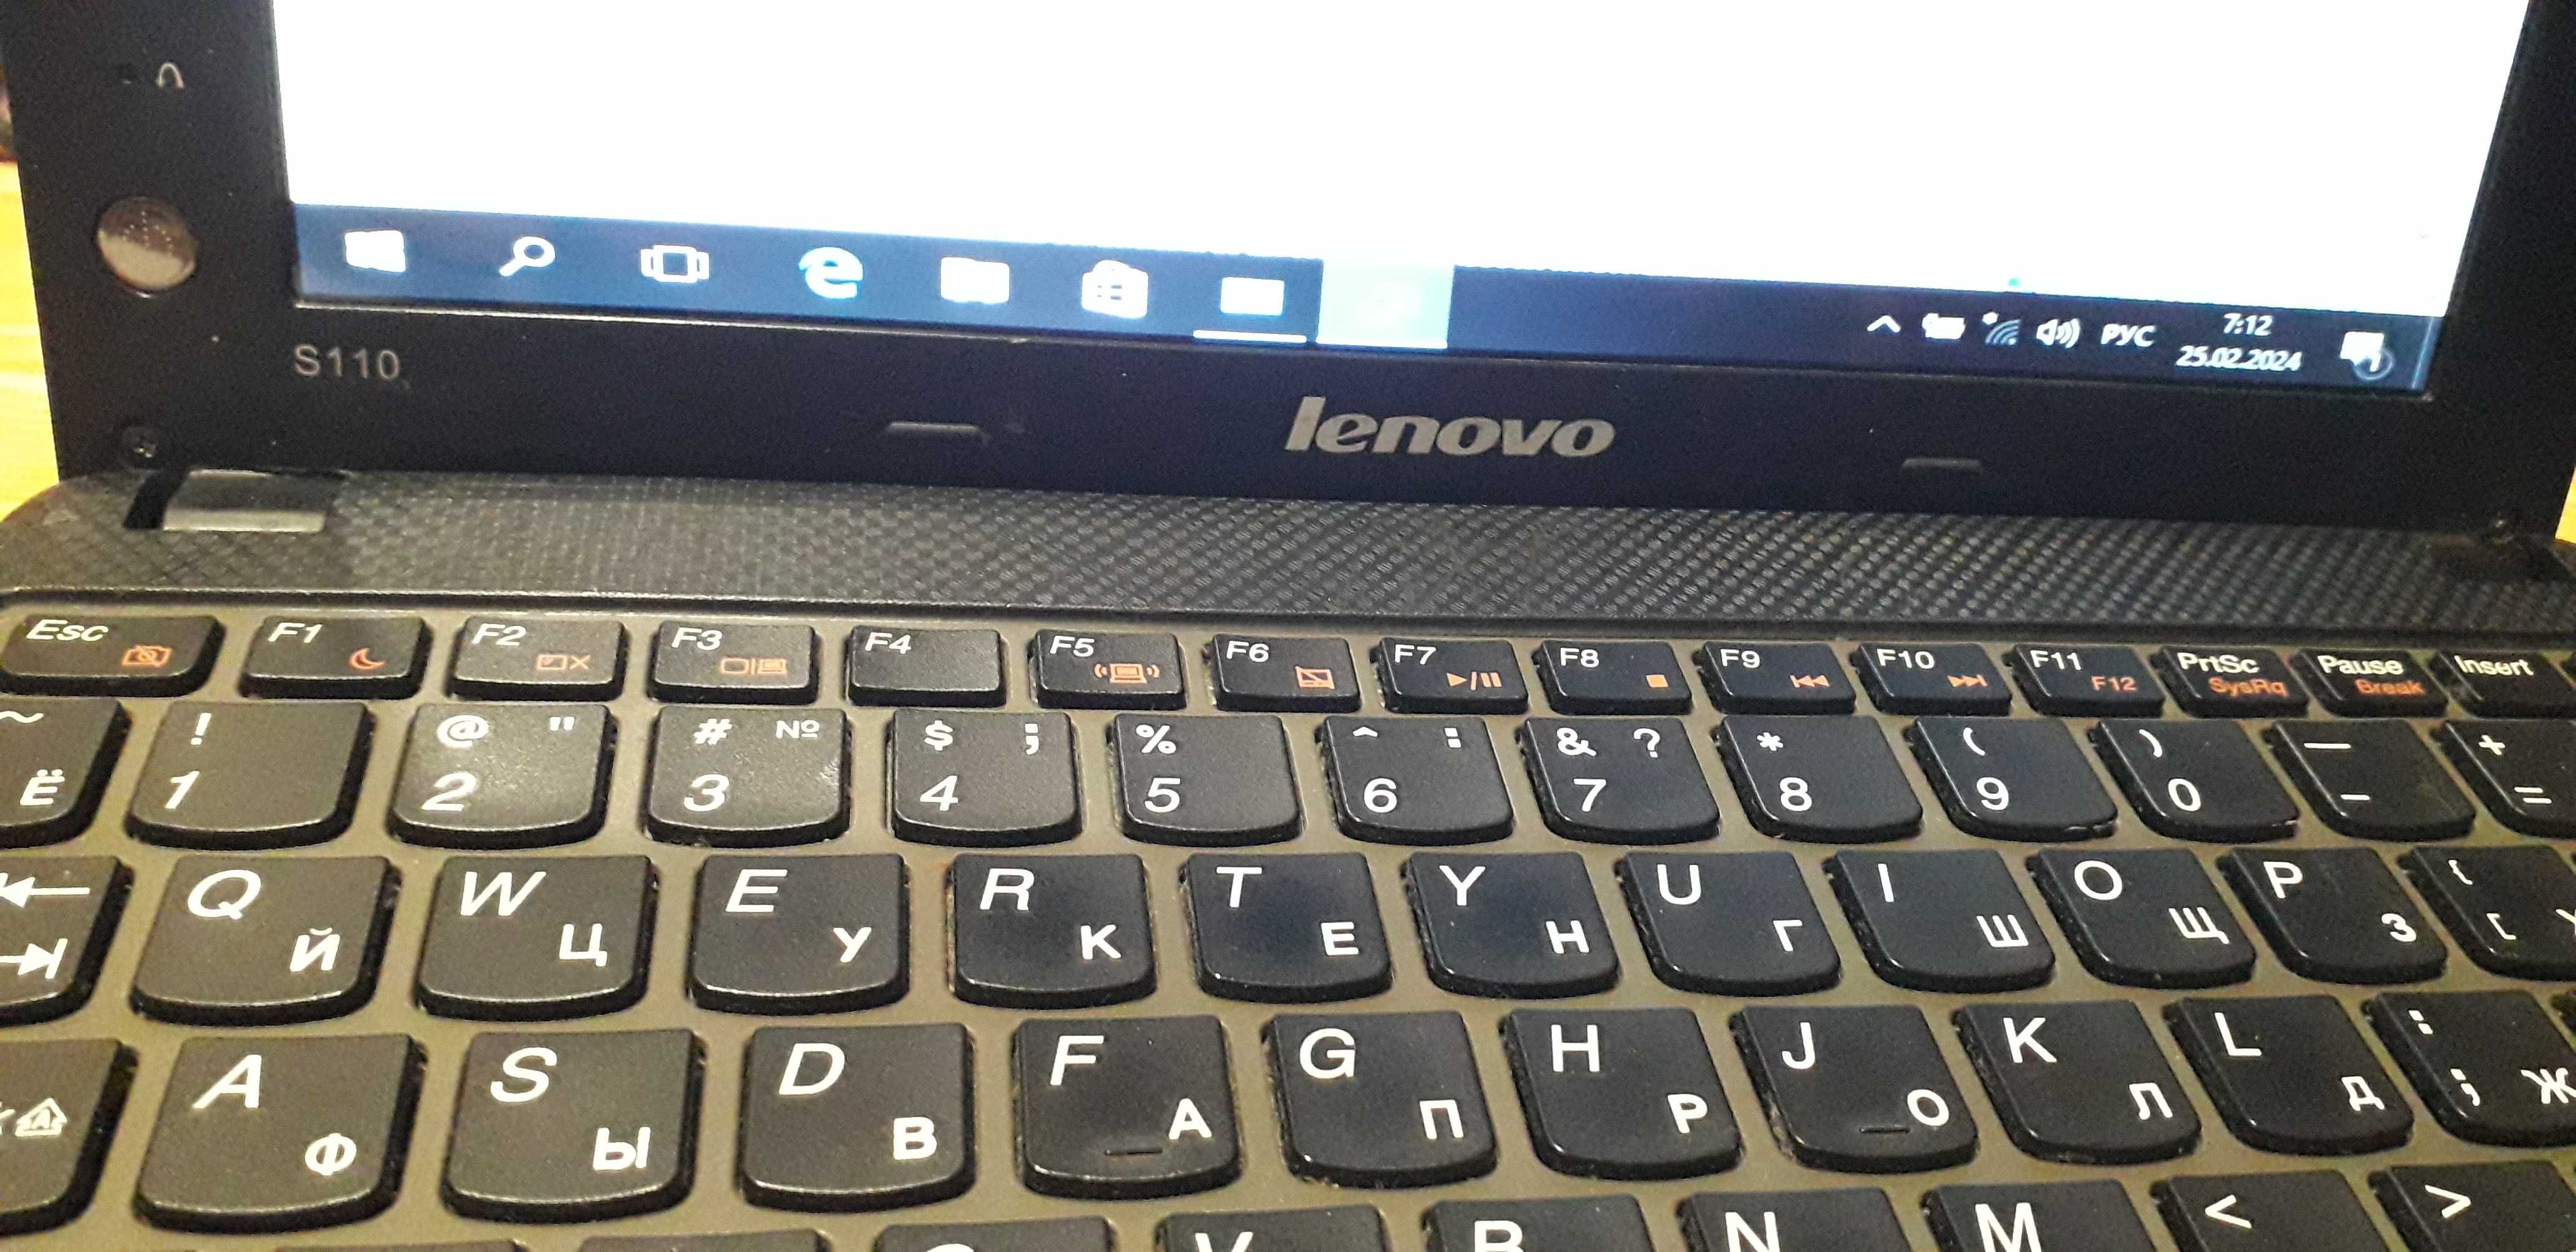 Продам нетбук Lenovo Ideapad S110